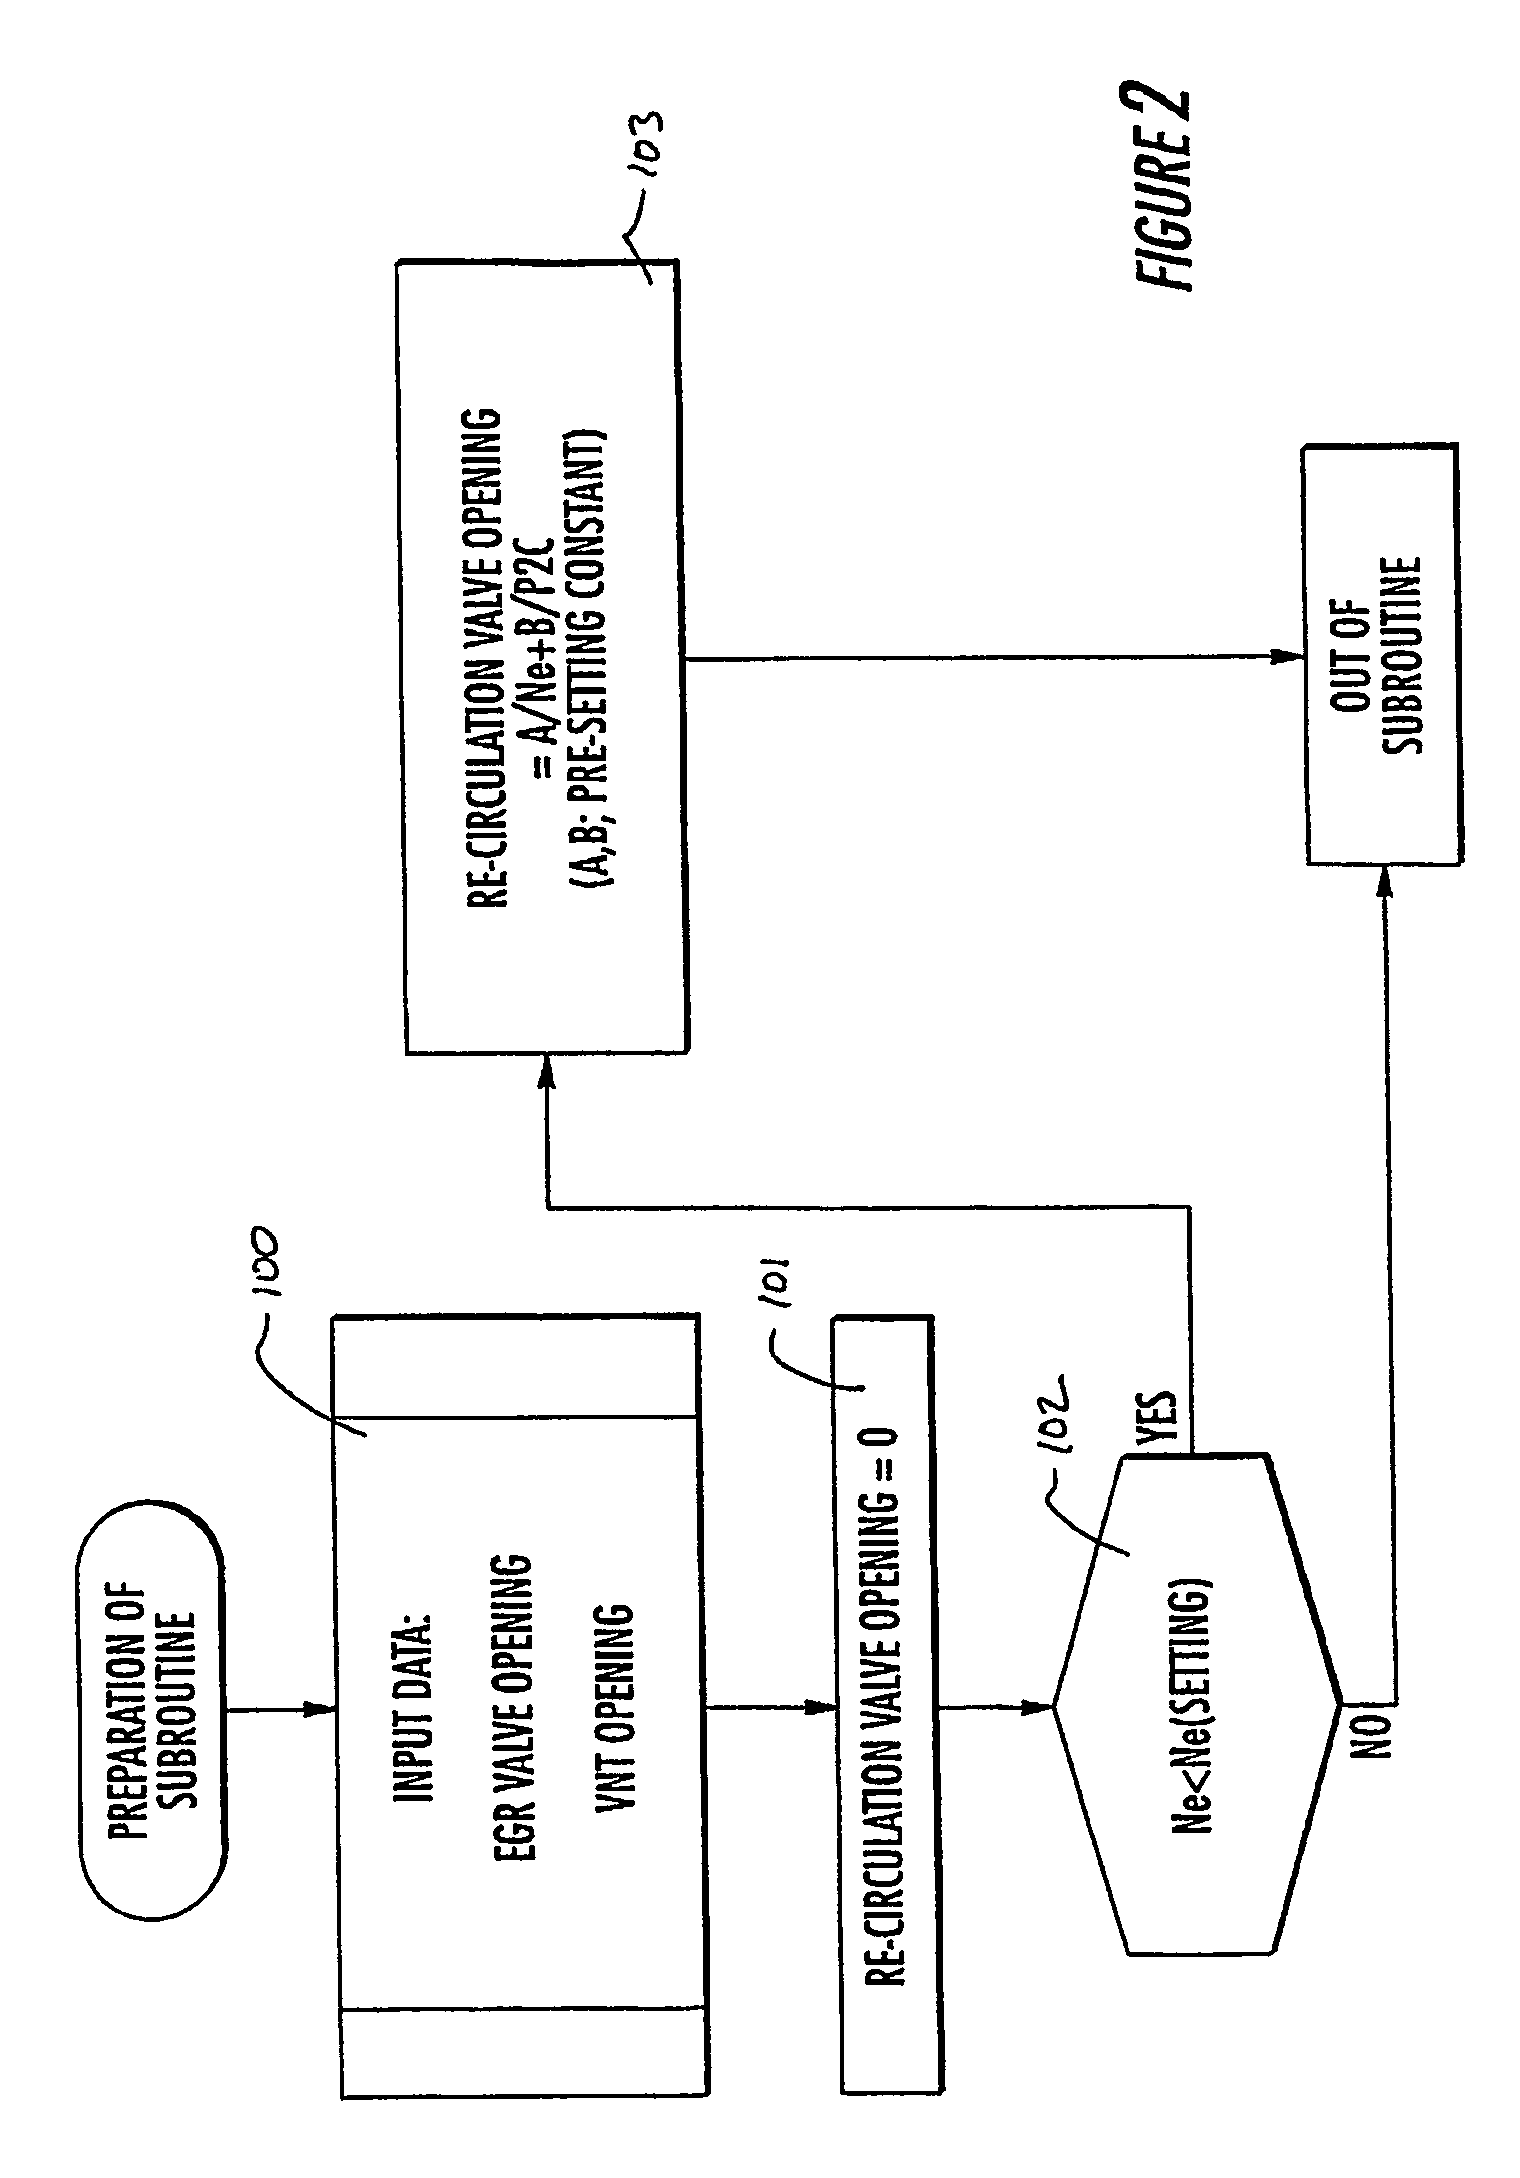 Surge control system for a compressor